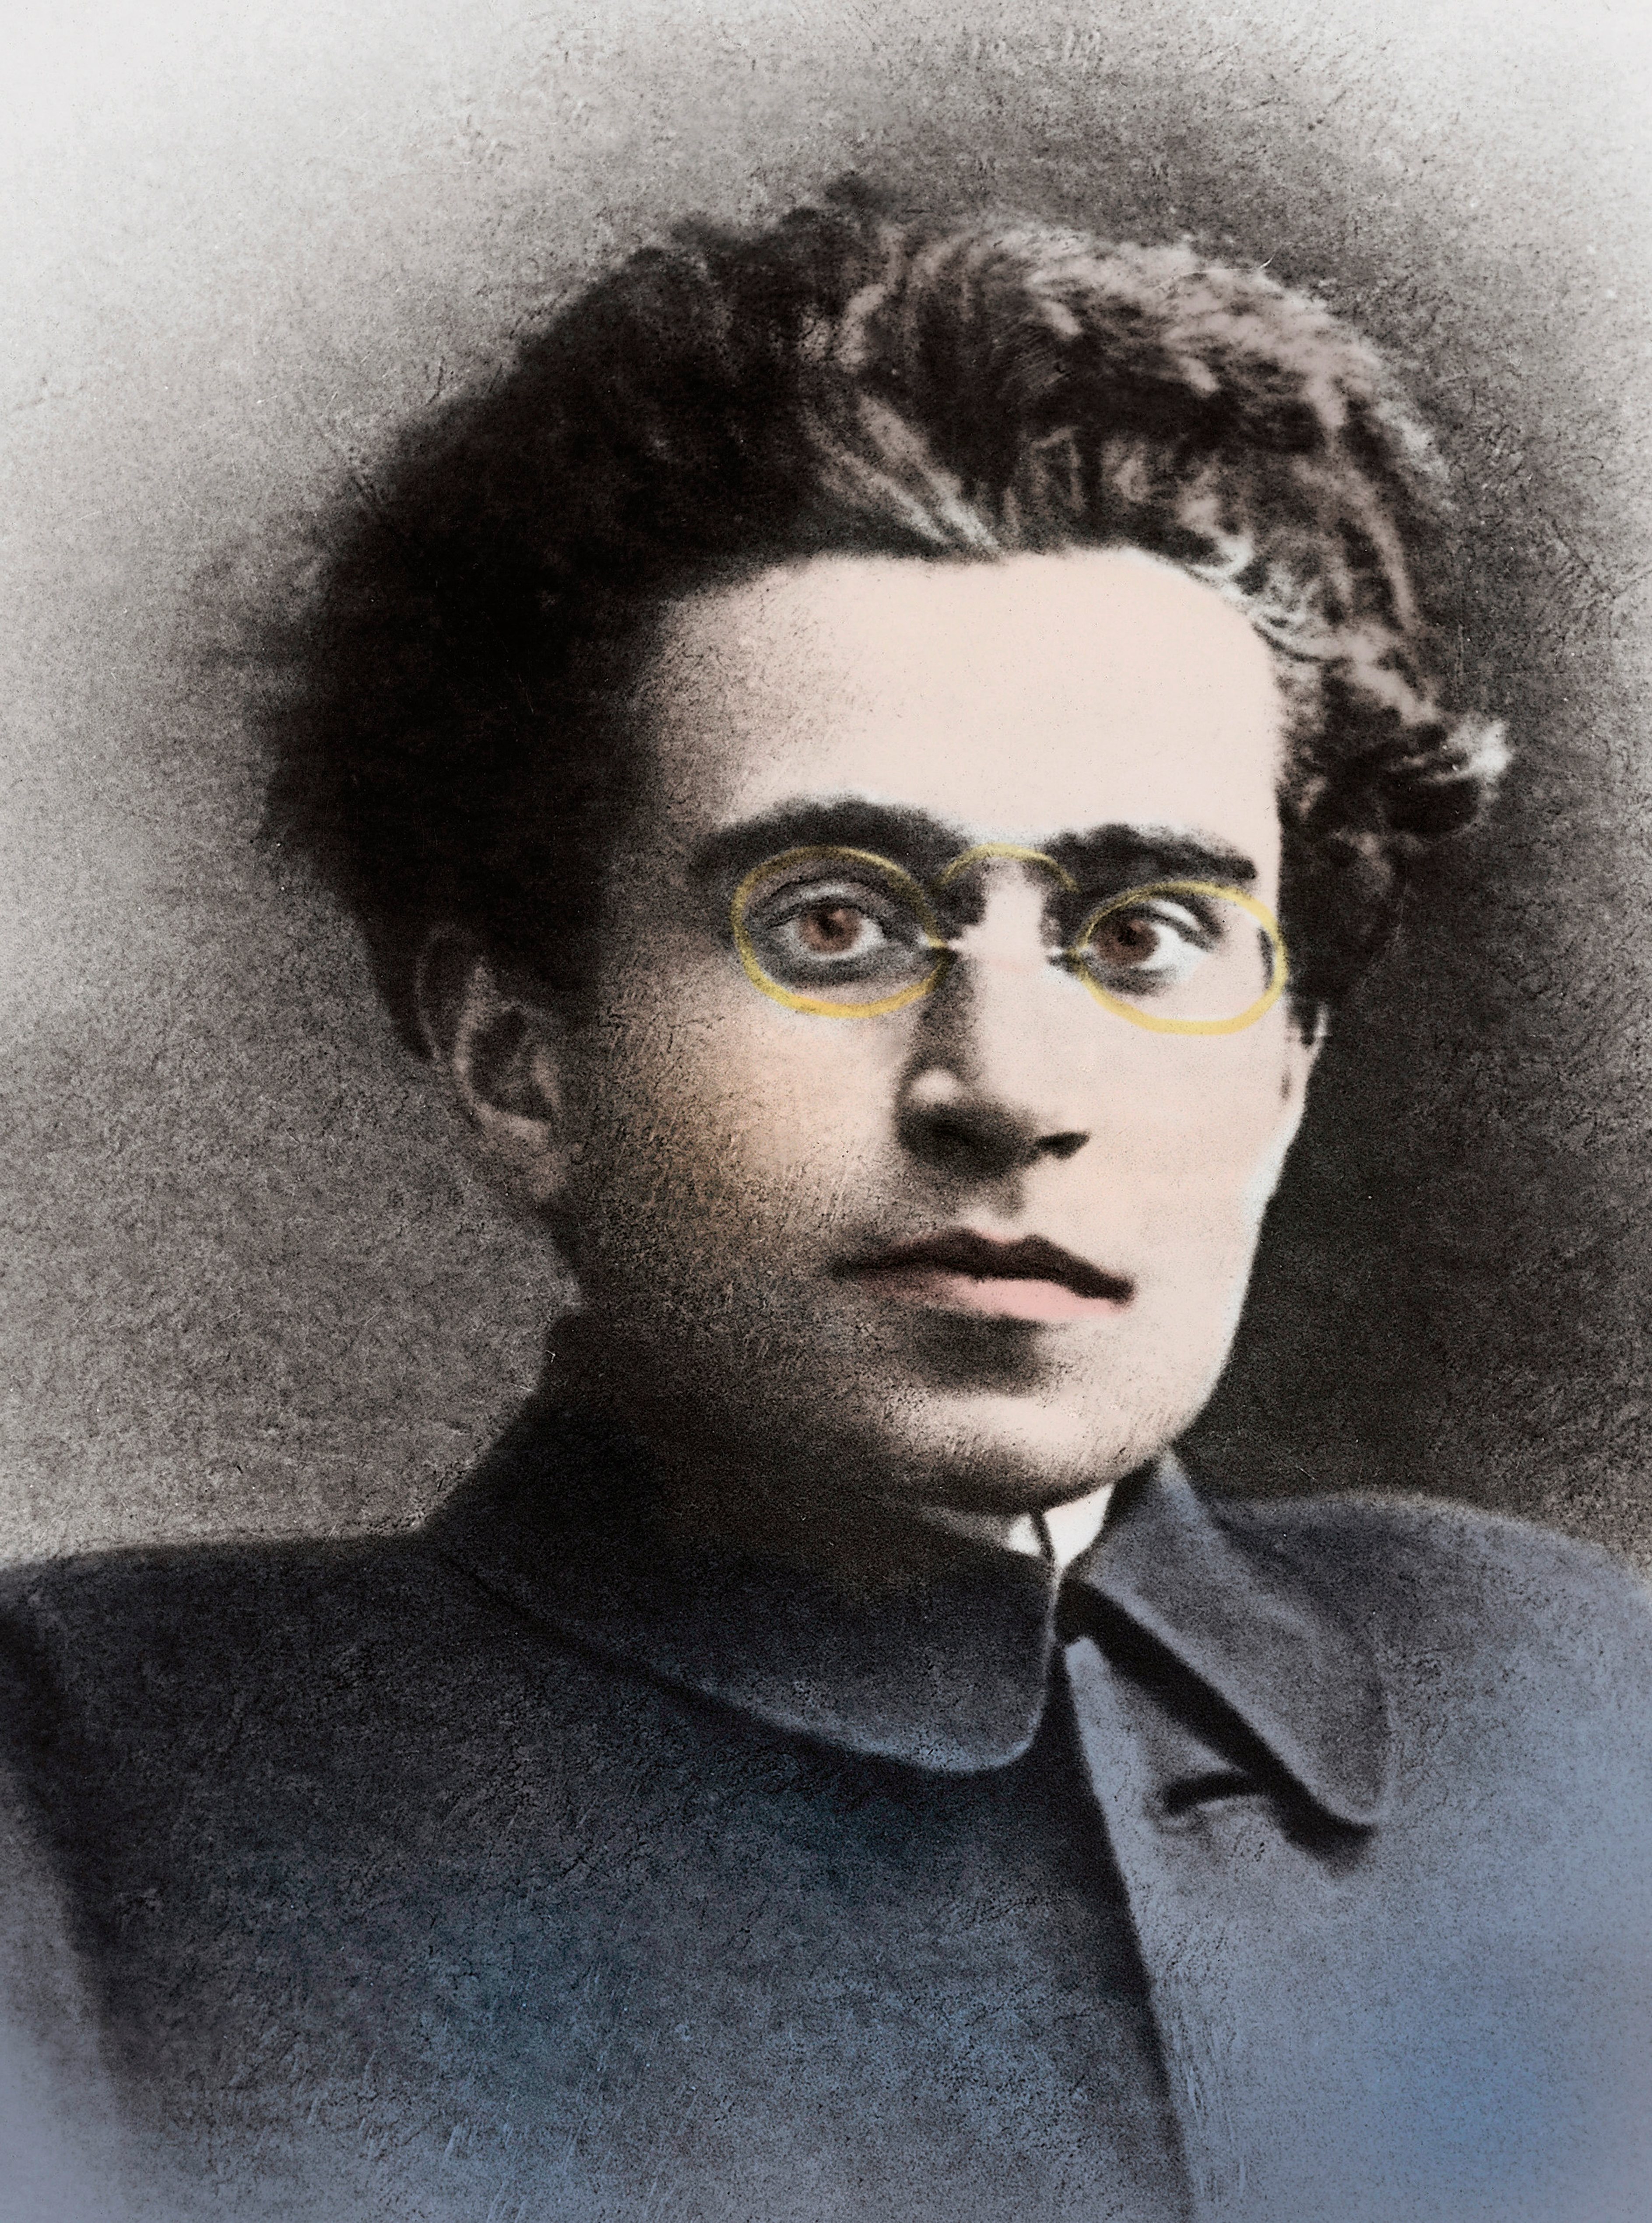 Italian politician Antonio Gramsci